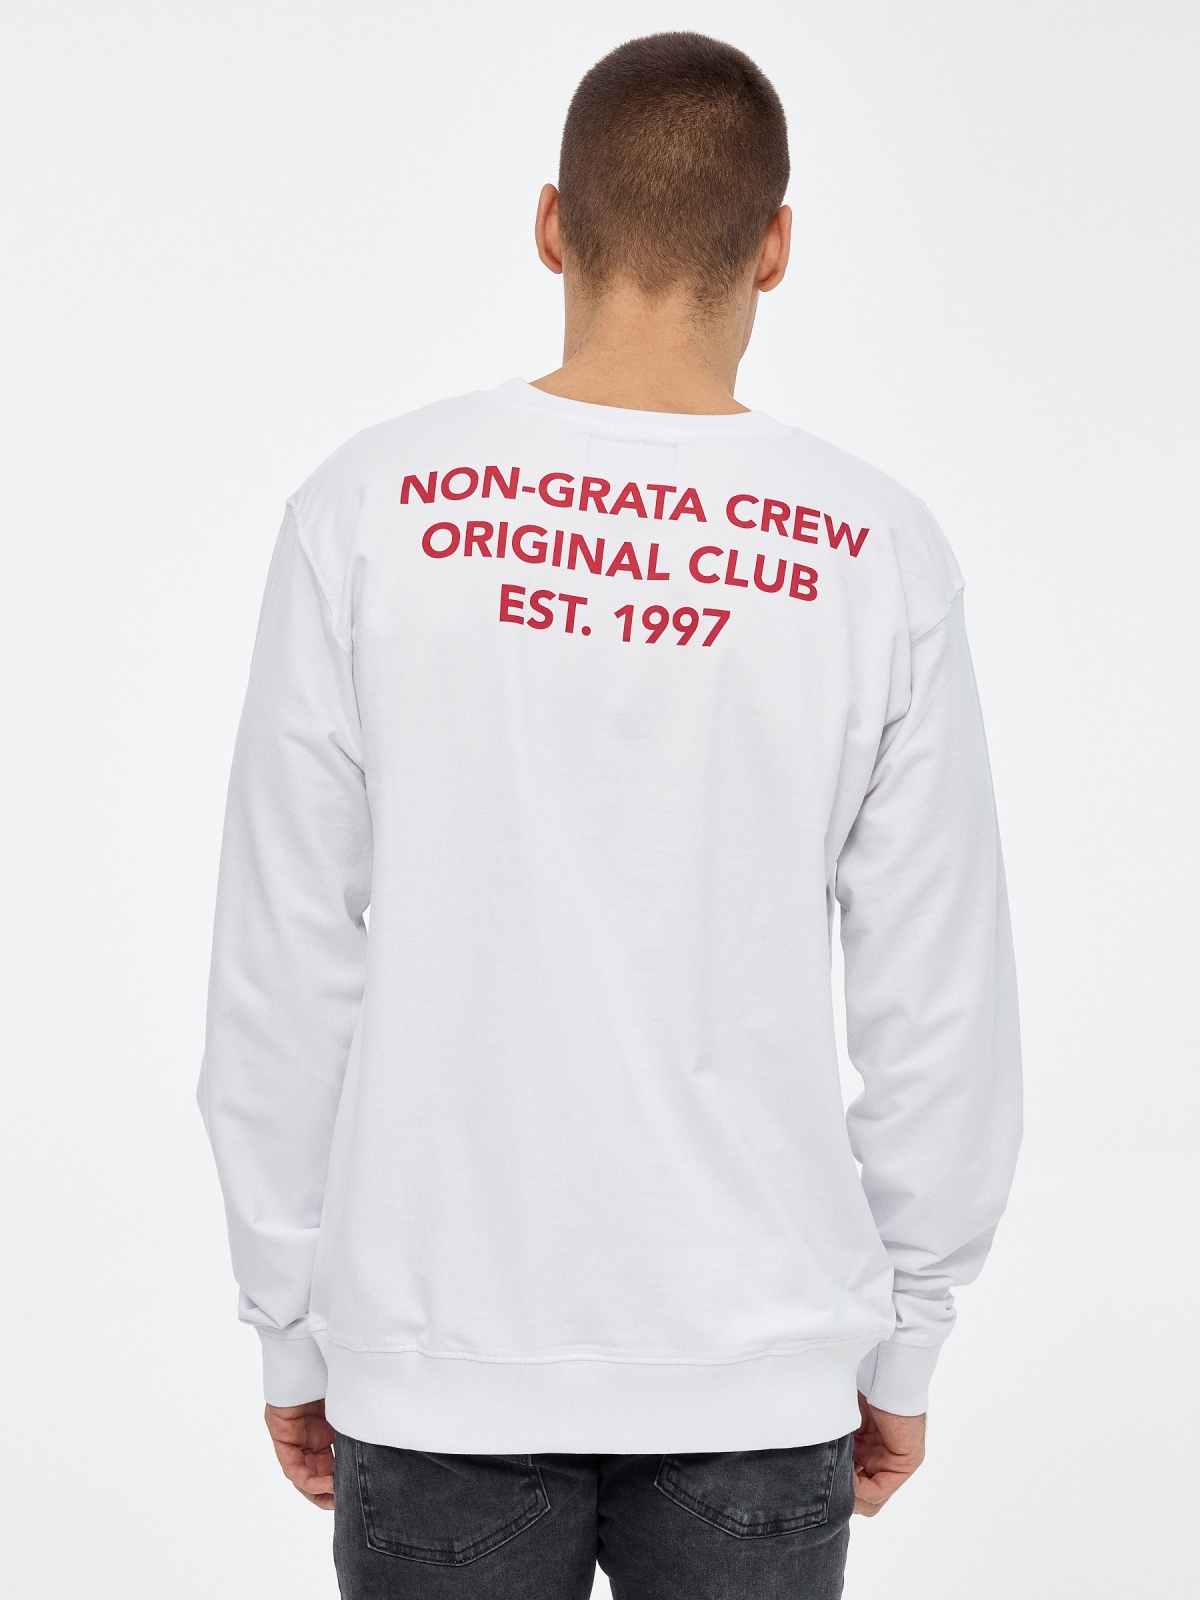 Original Club Sweatshirt white middle back view